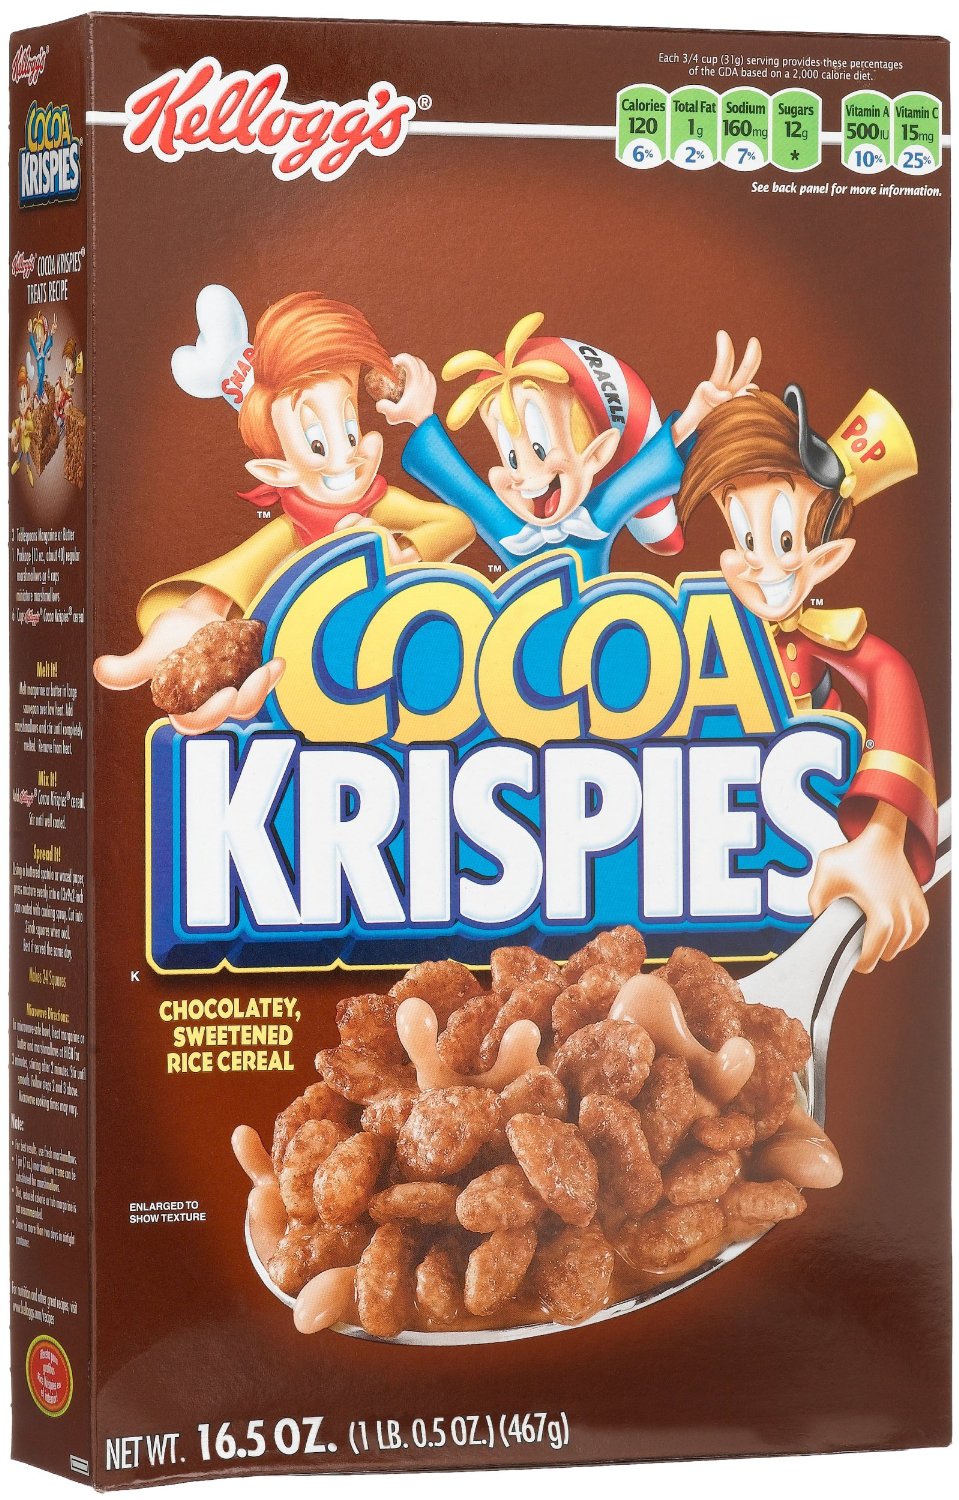 cocoa krispies